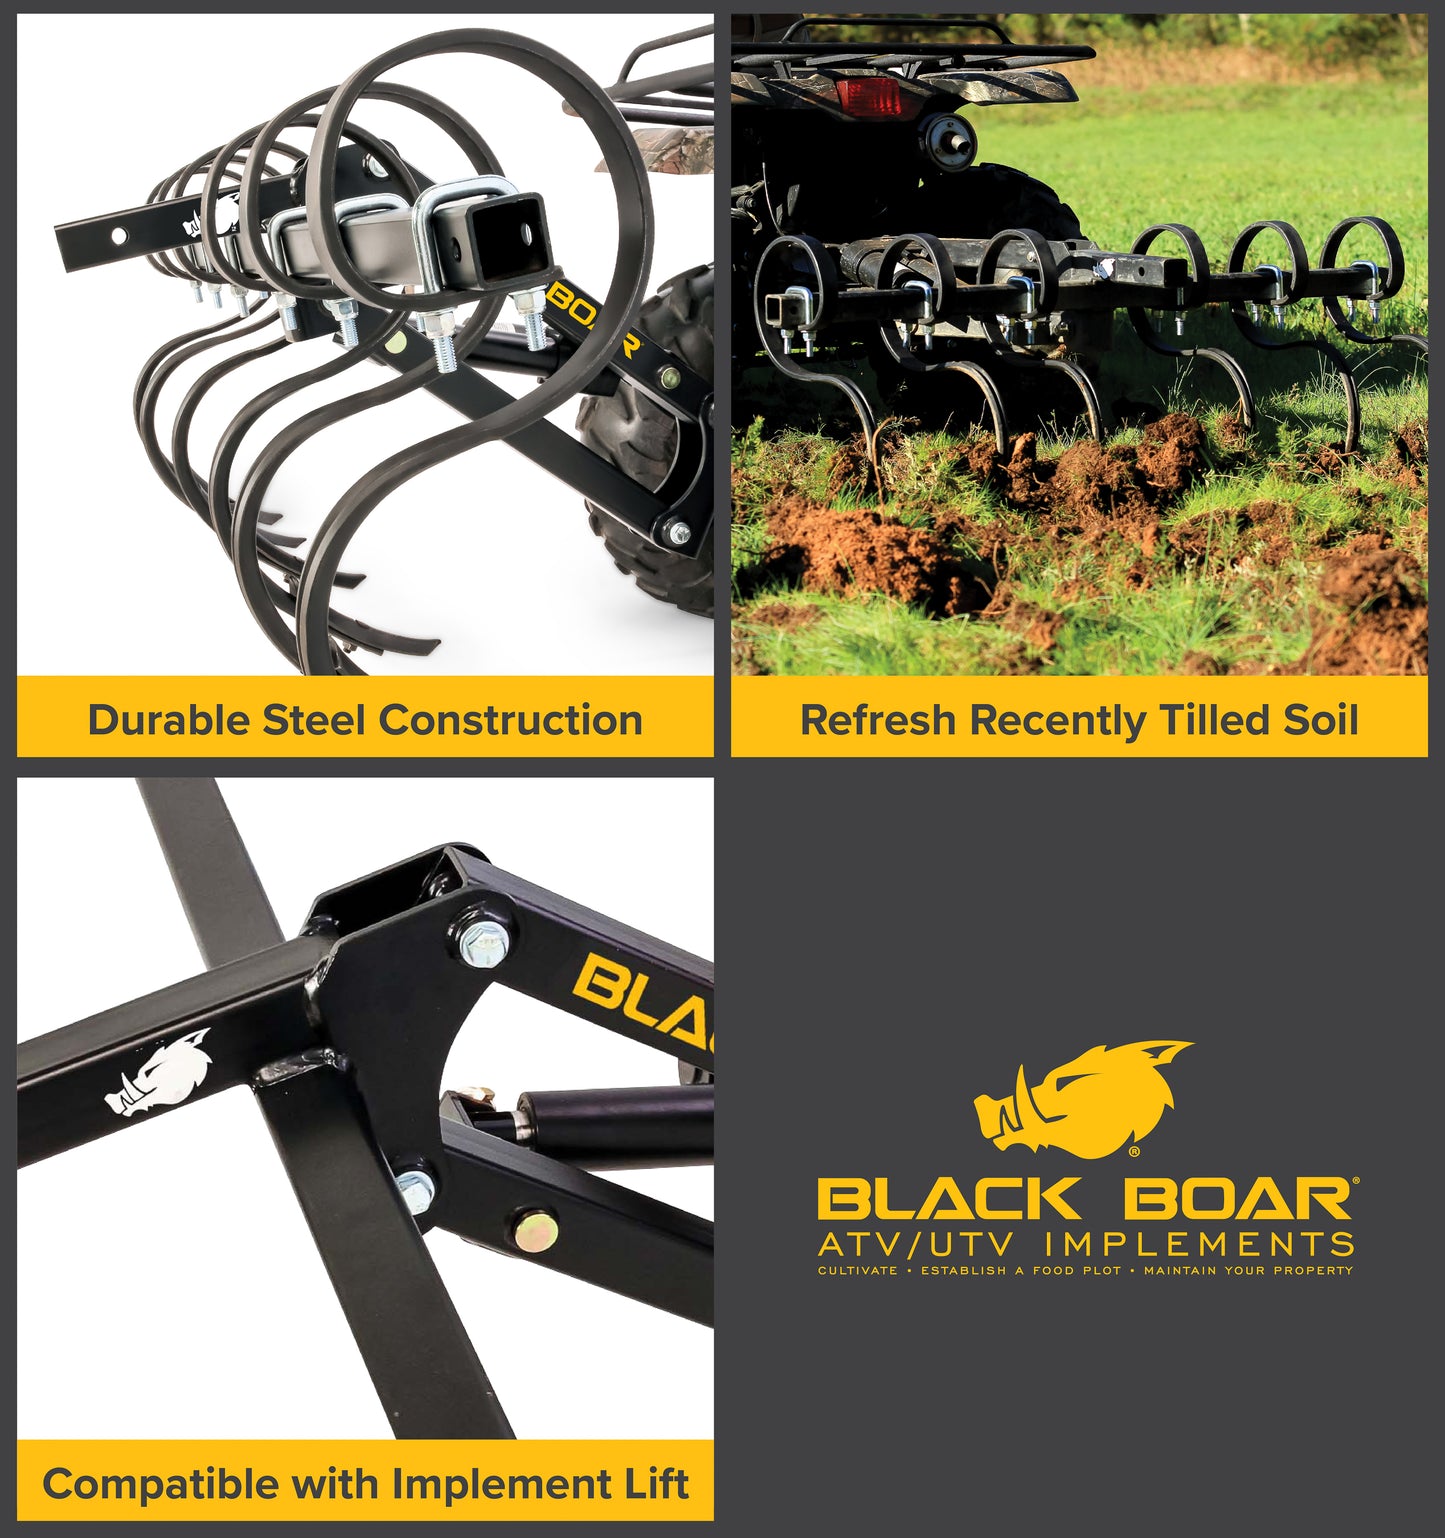 Black Boar ATV / UTV S-Tine Cultivator Implement